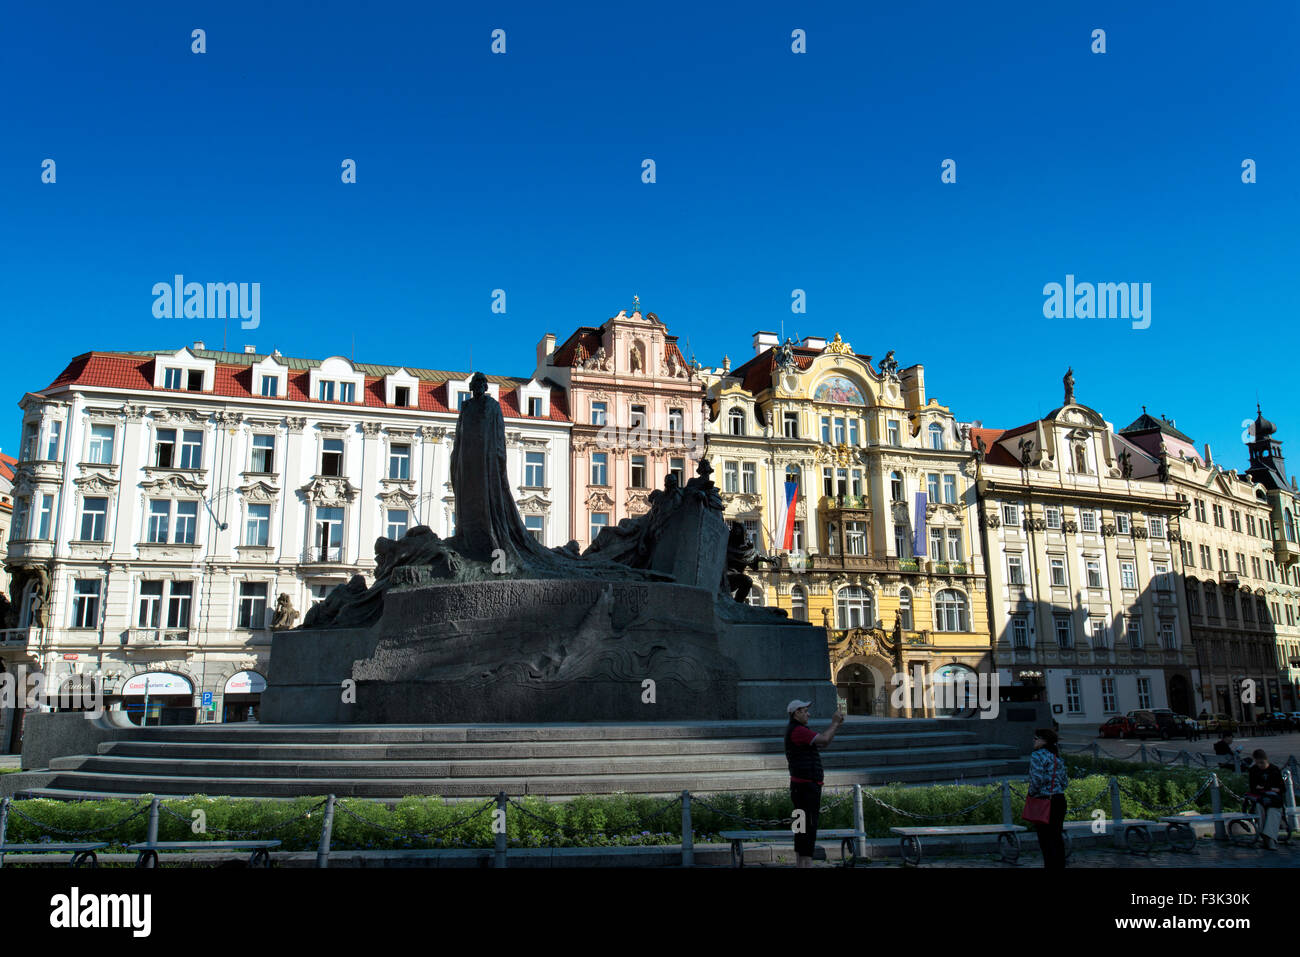 jan Hus Monument, Old Town Square, North Side, Ministerstvo pro mistni, Prague Czech Republic Stock Photo